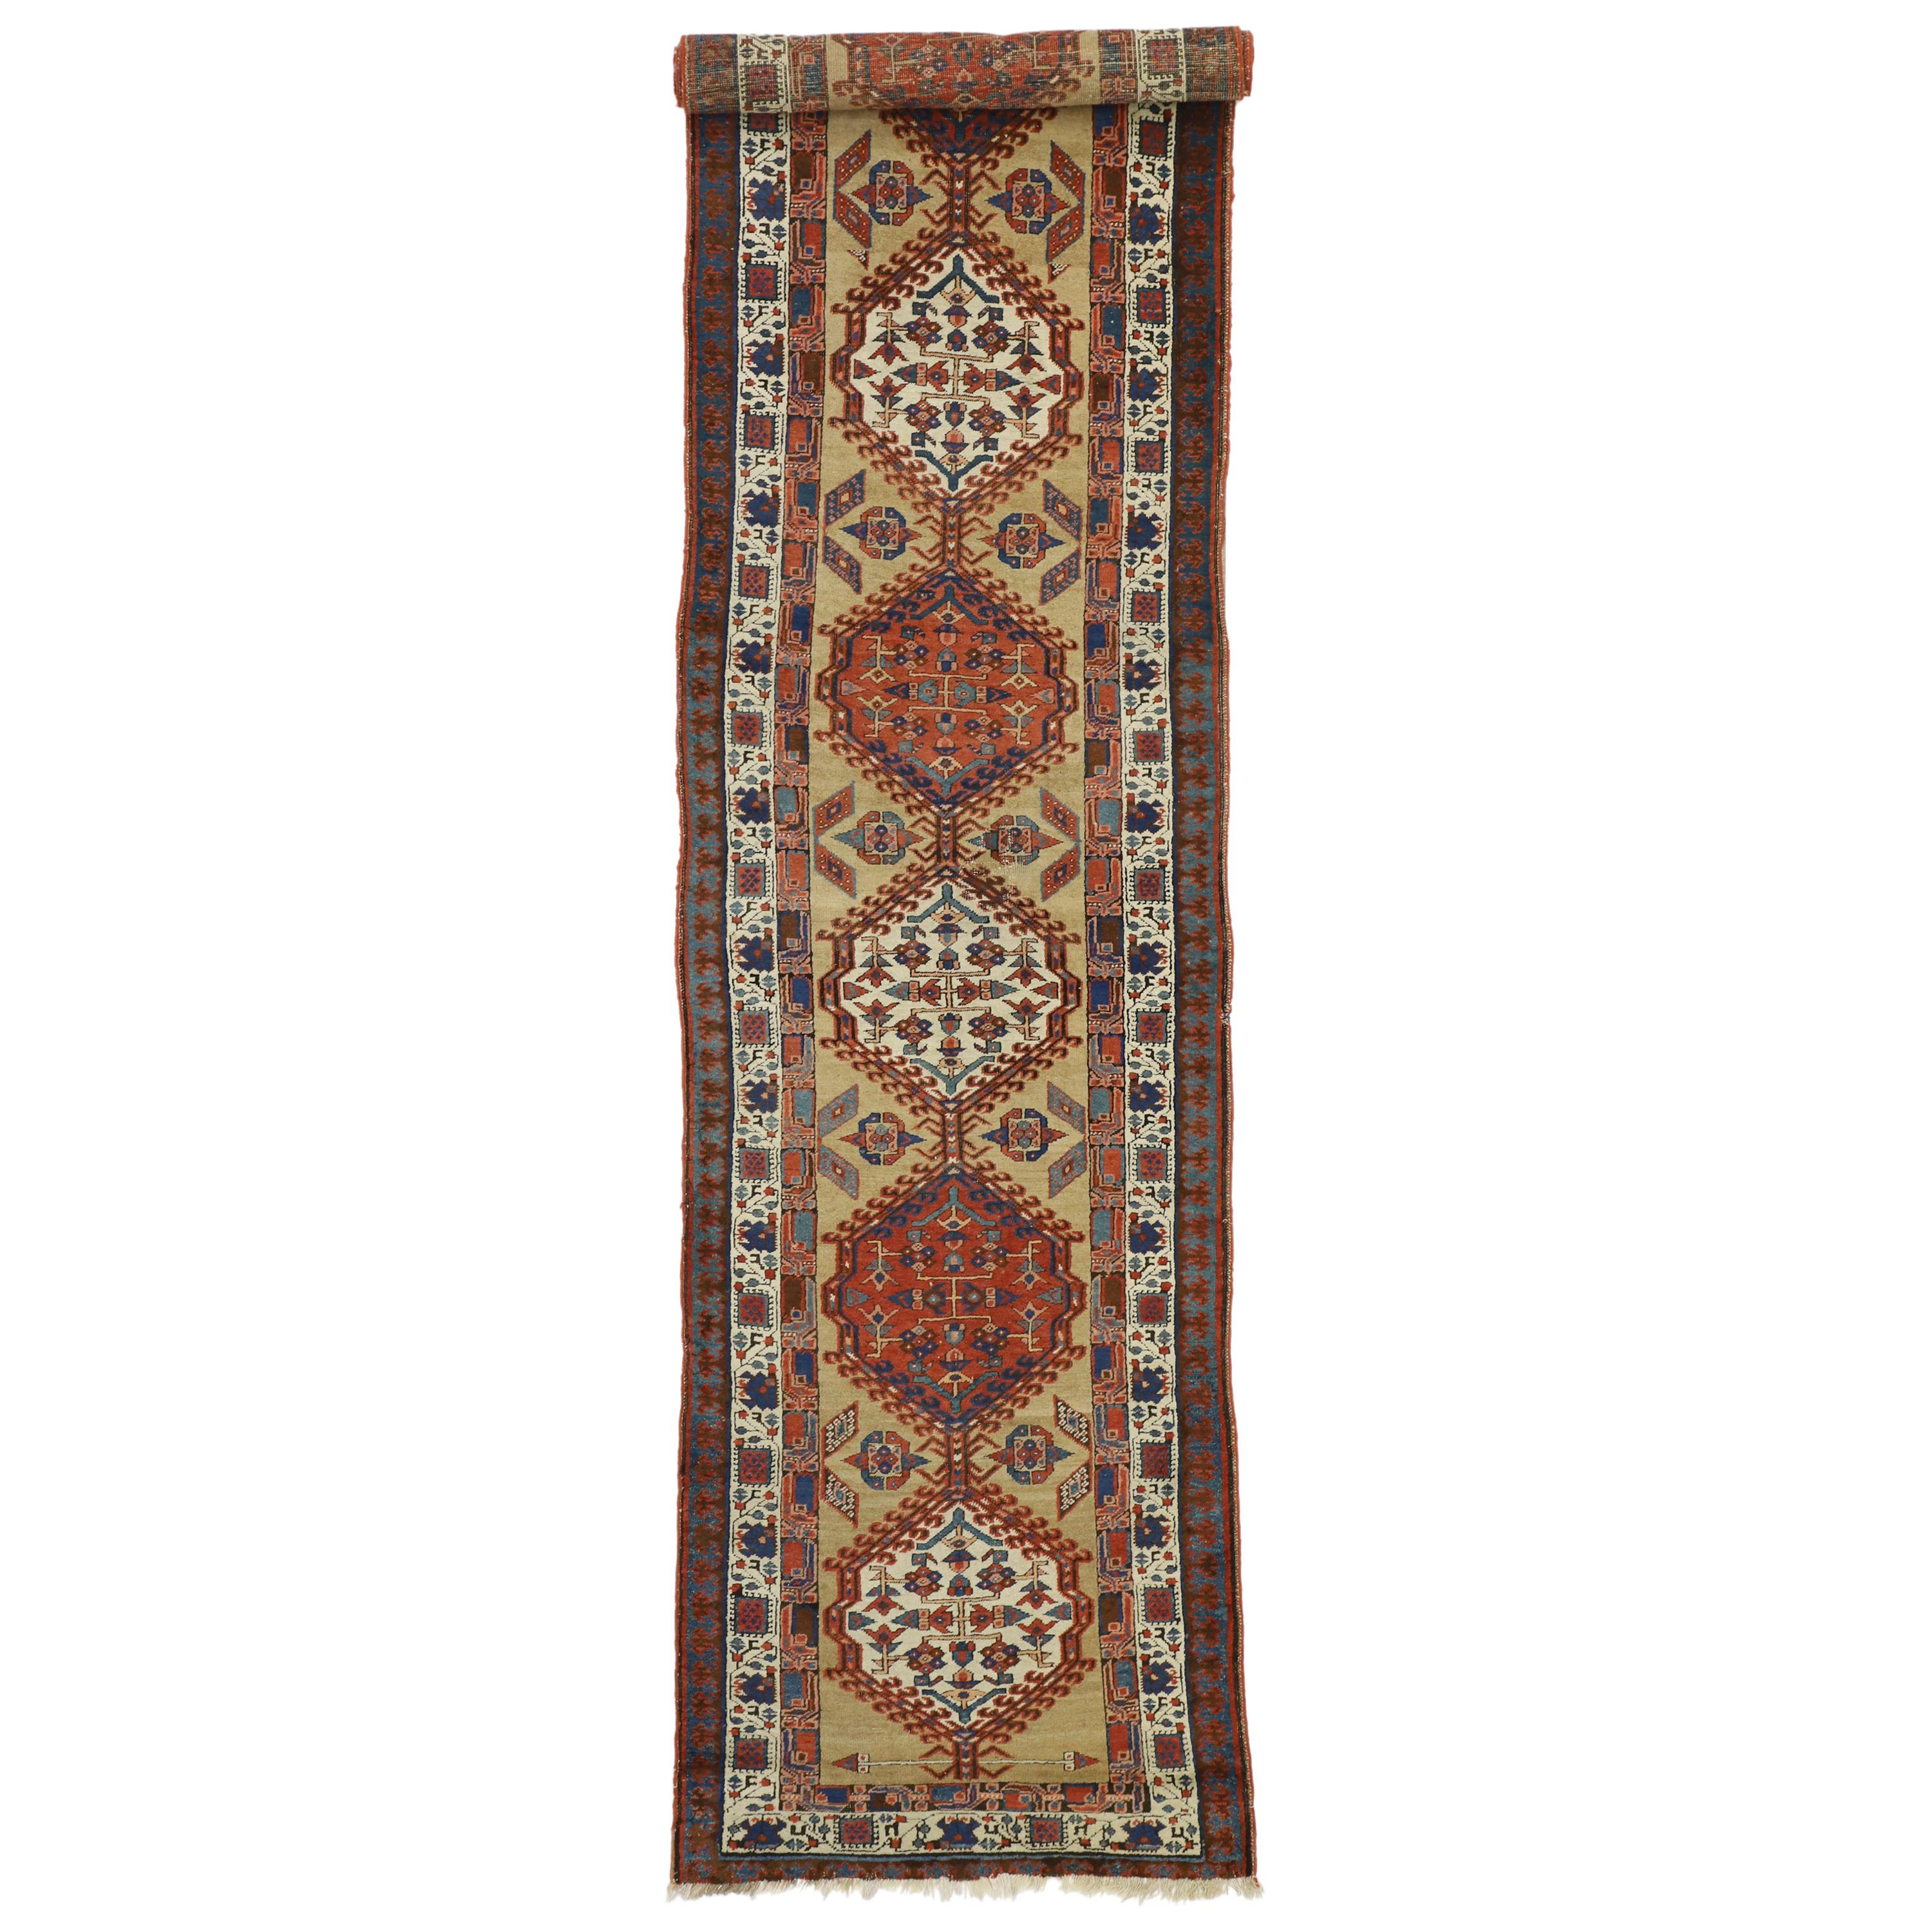 Tapis de couloir Sarab persan ancien, tapis de couloir long